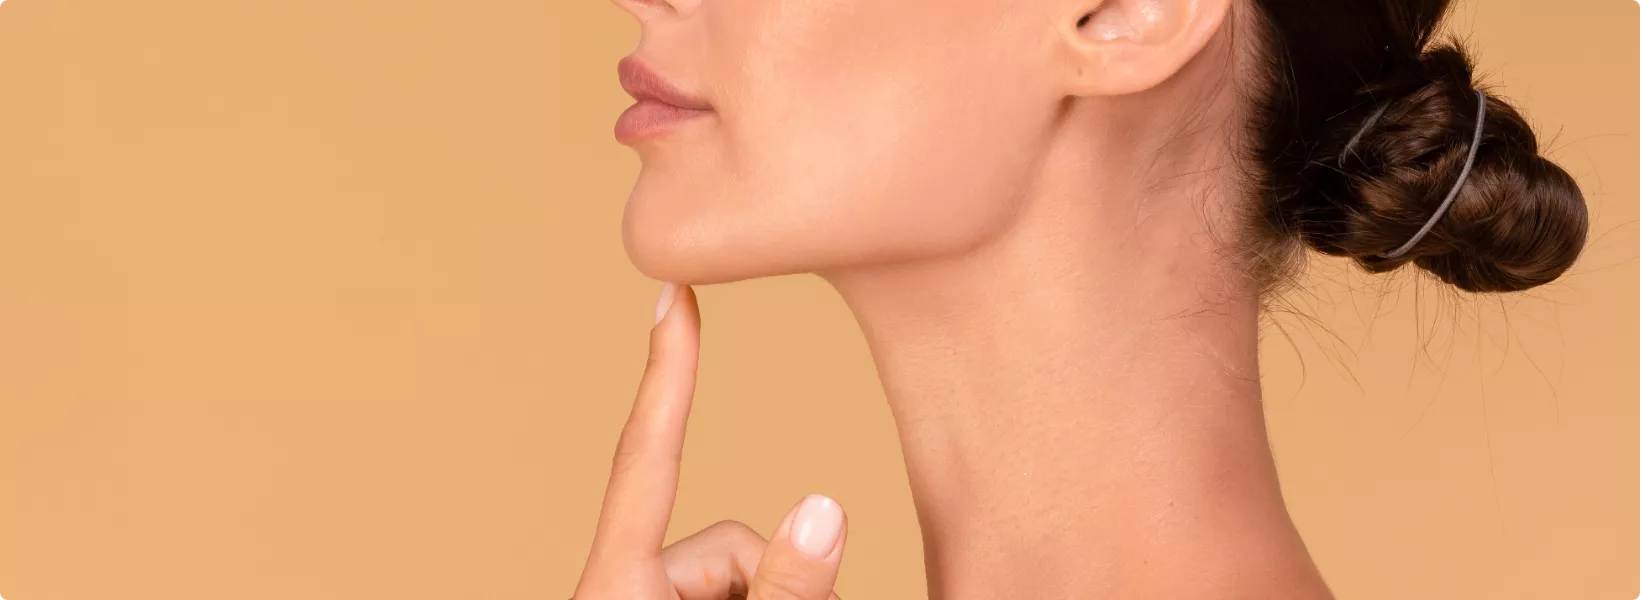 woman's chin in profile